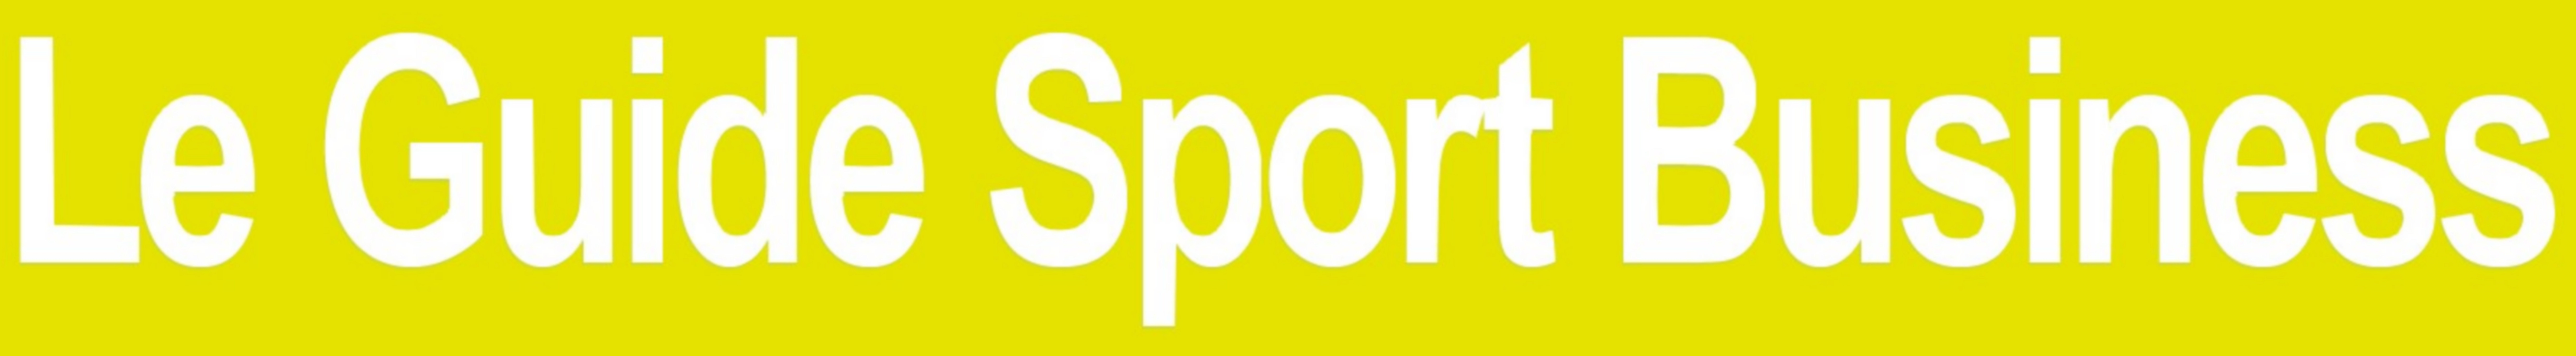 Le Guide Sport Business